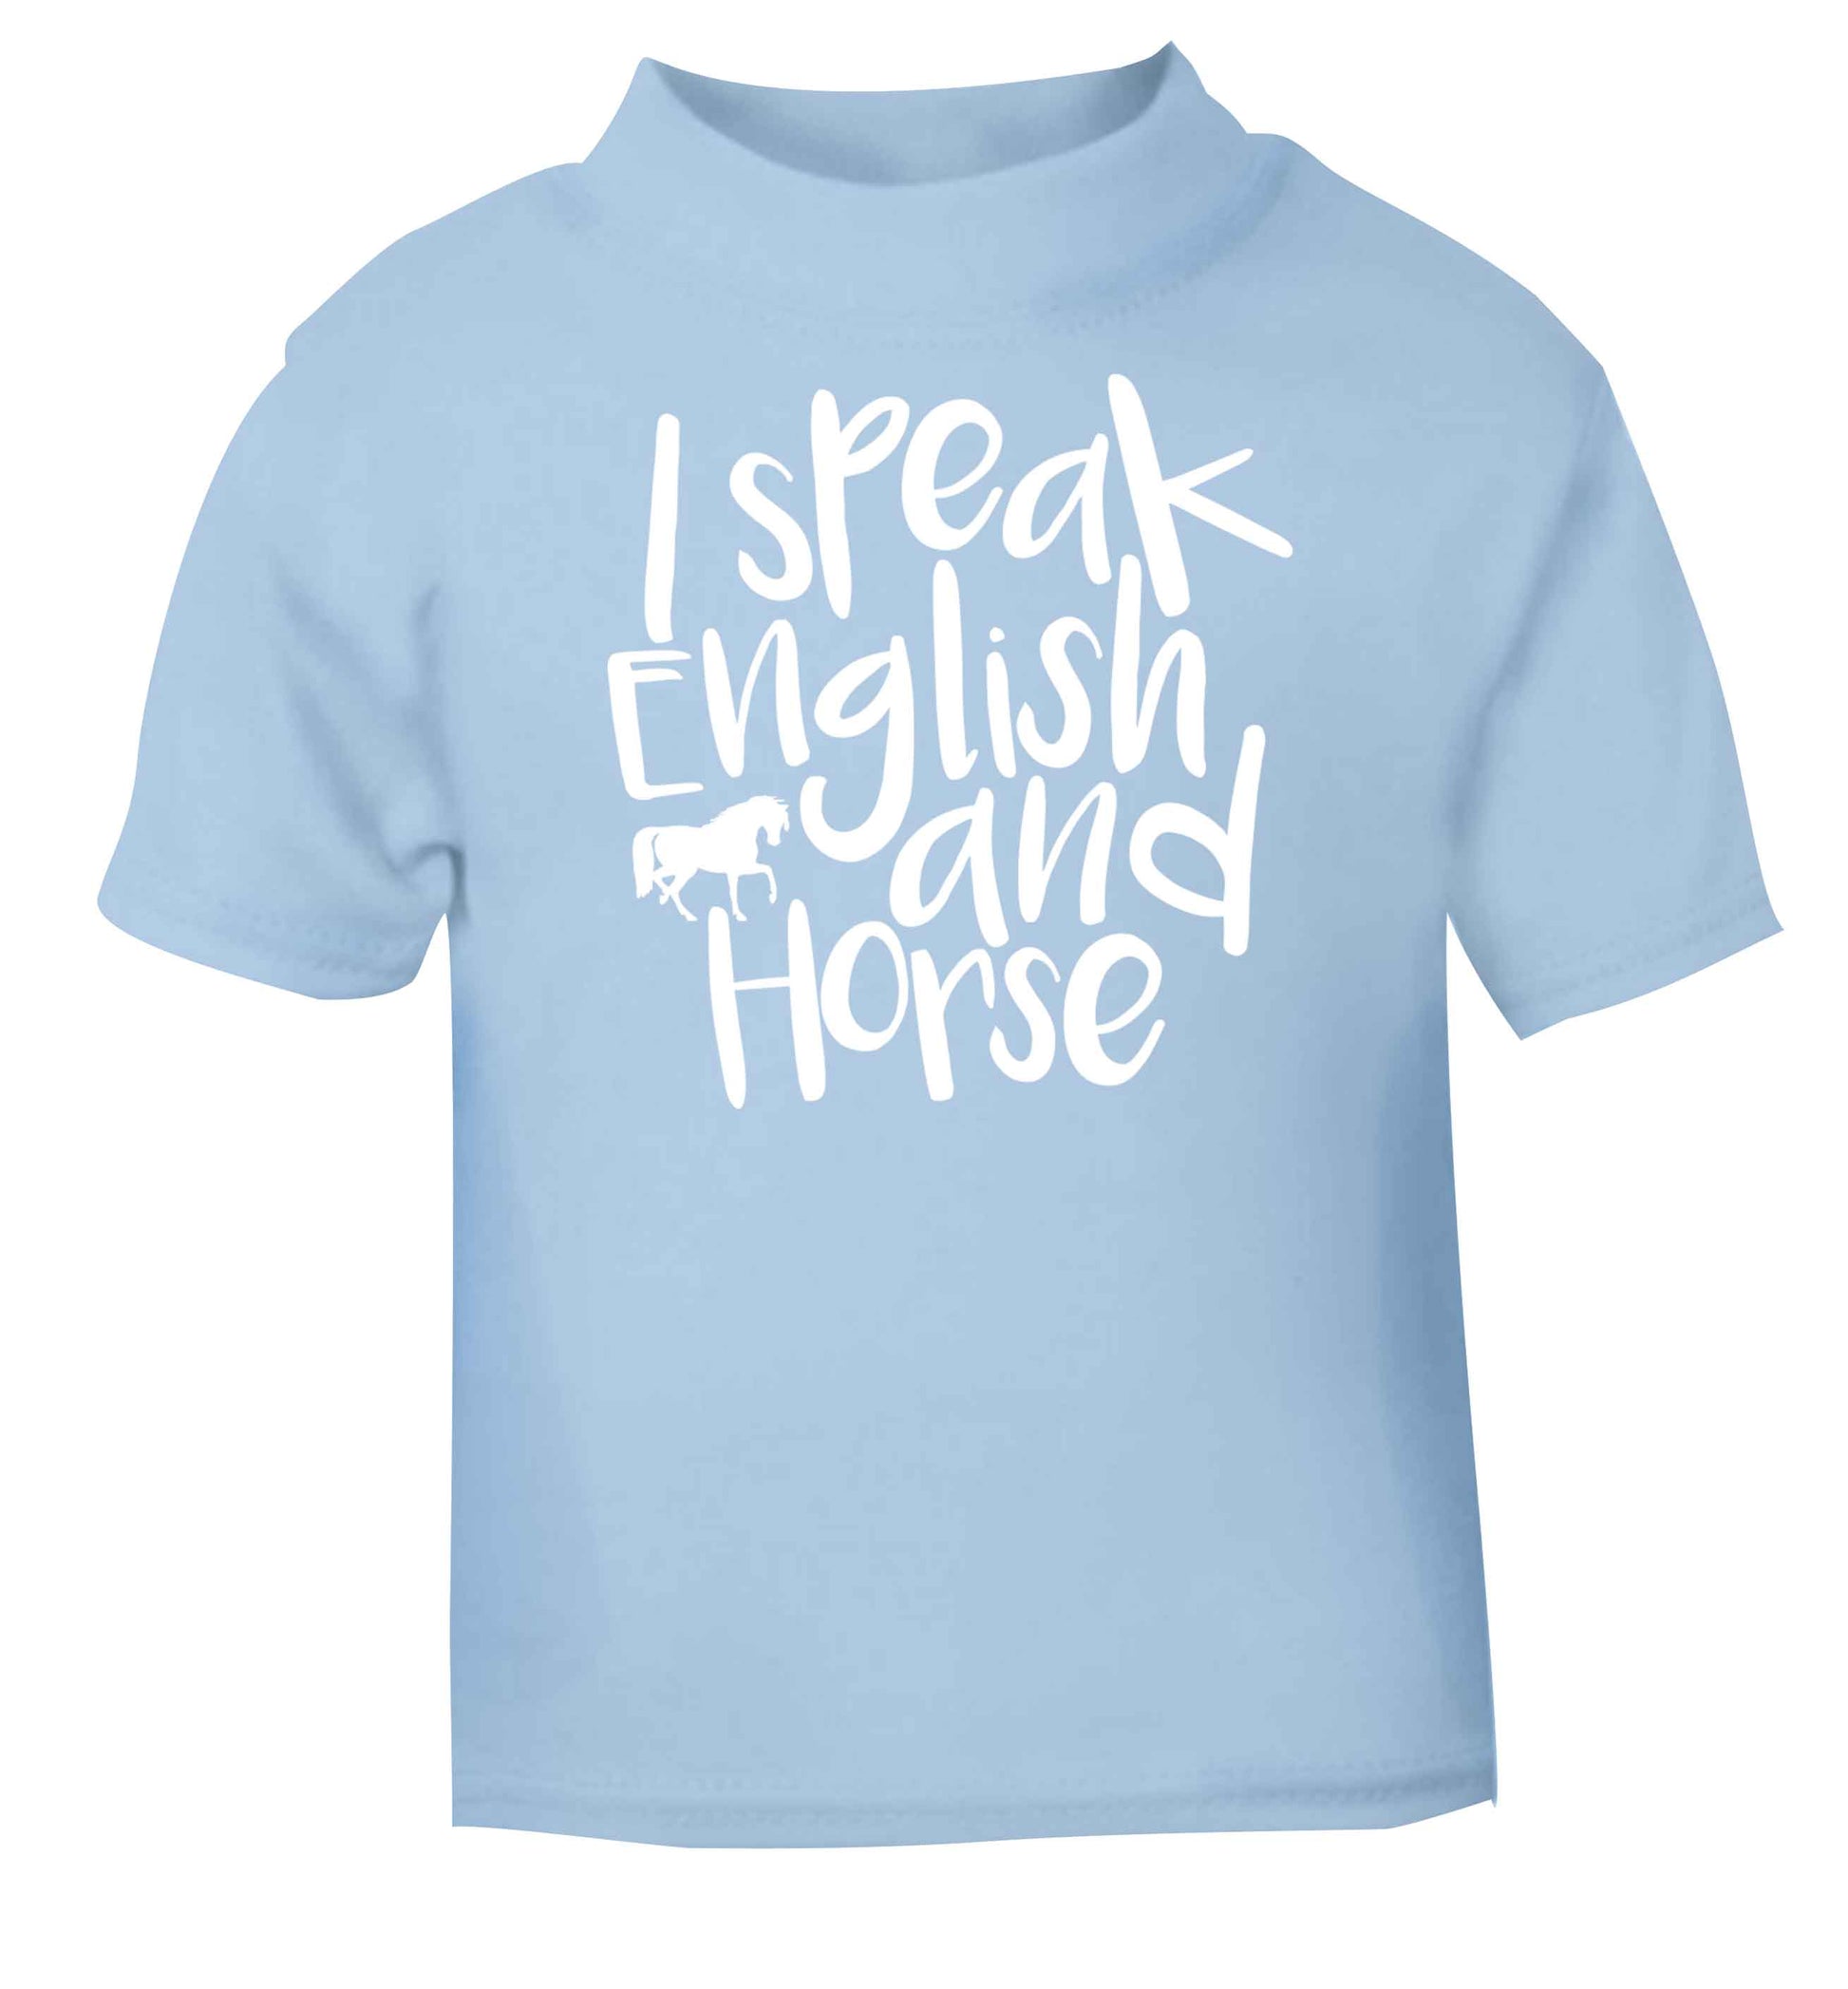 I speak English and horse light blue baby toddler Tshirt 2 Years